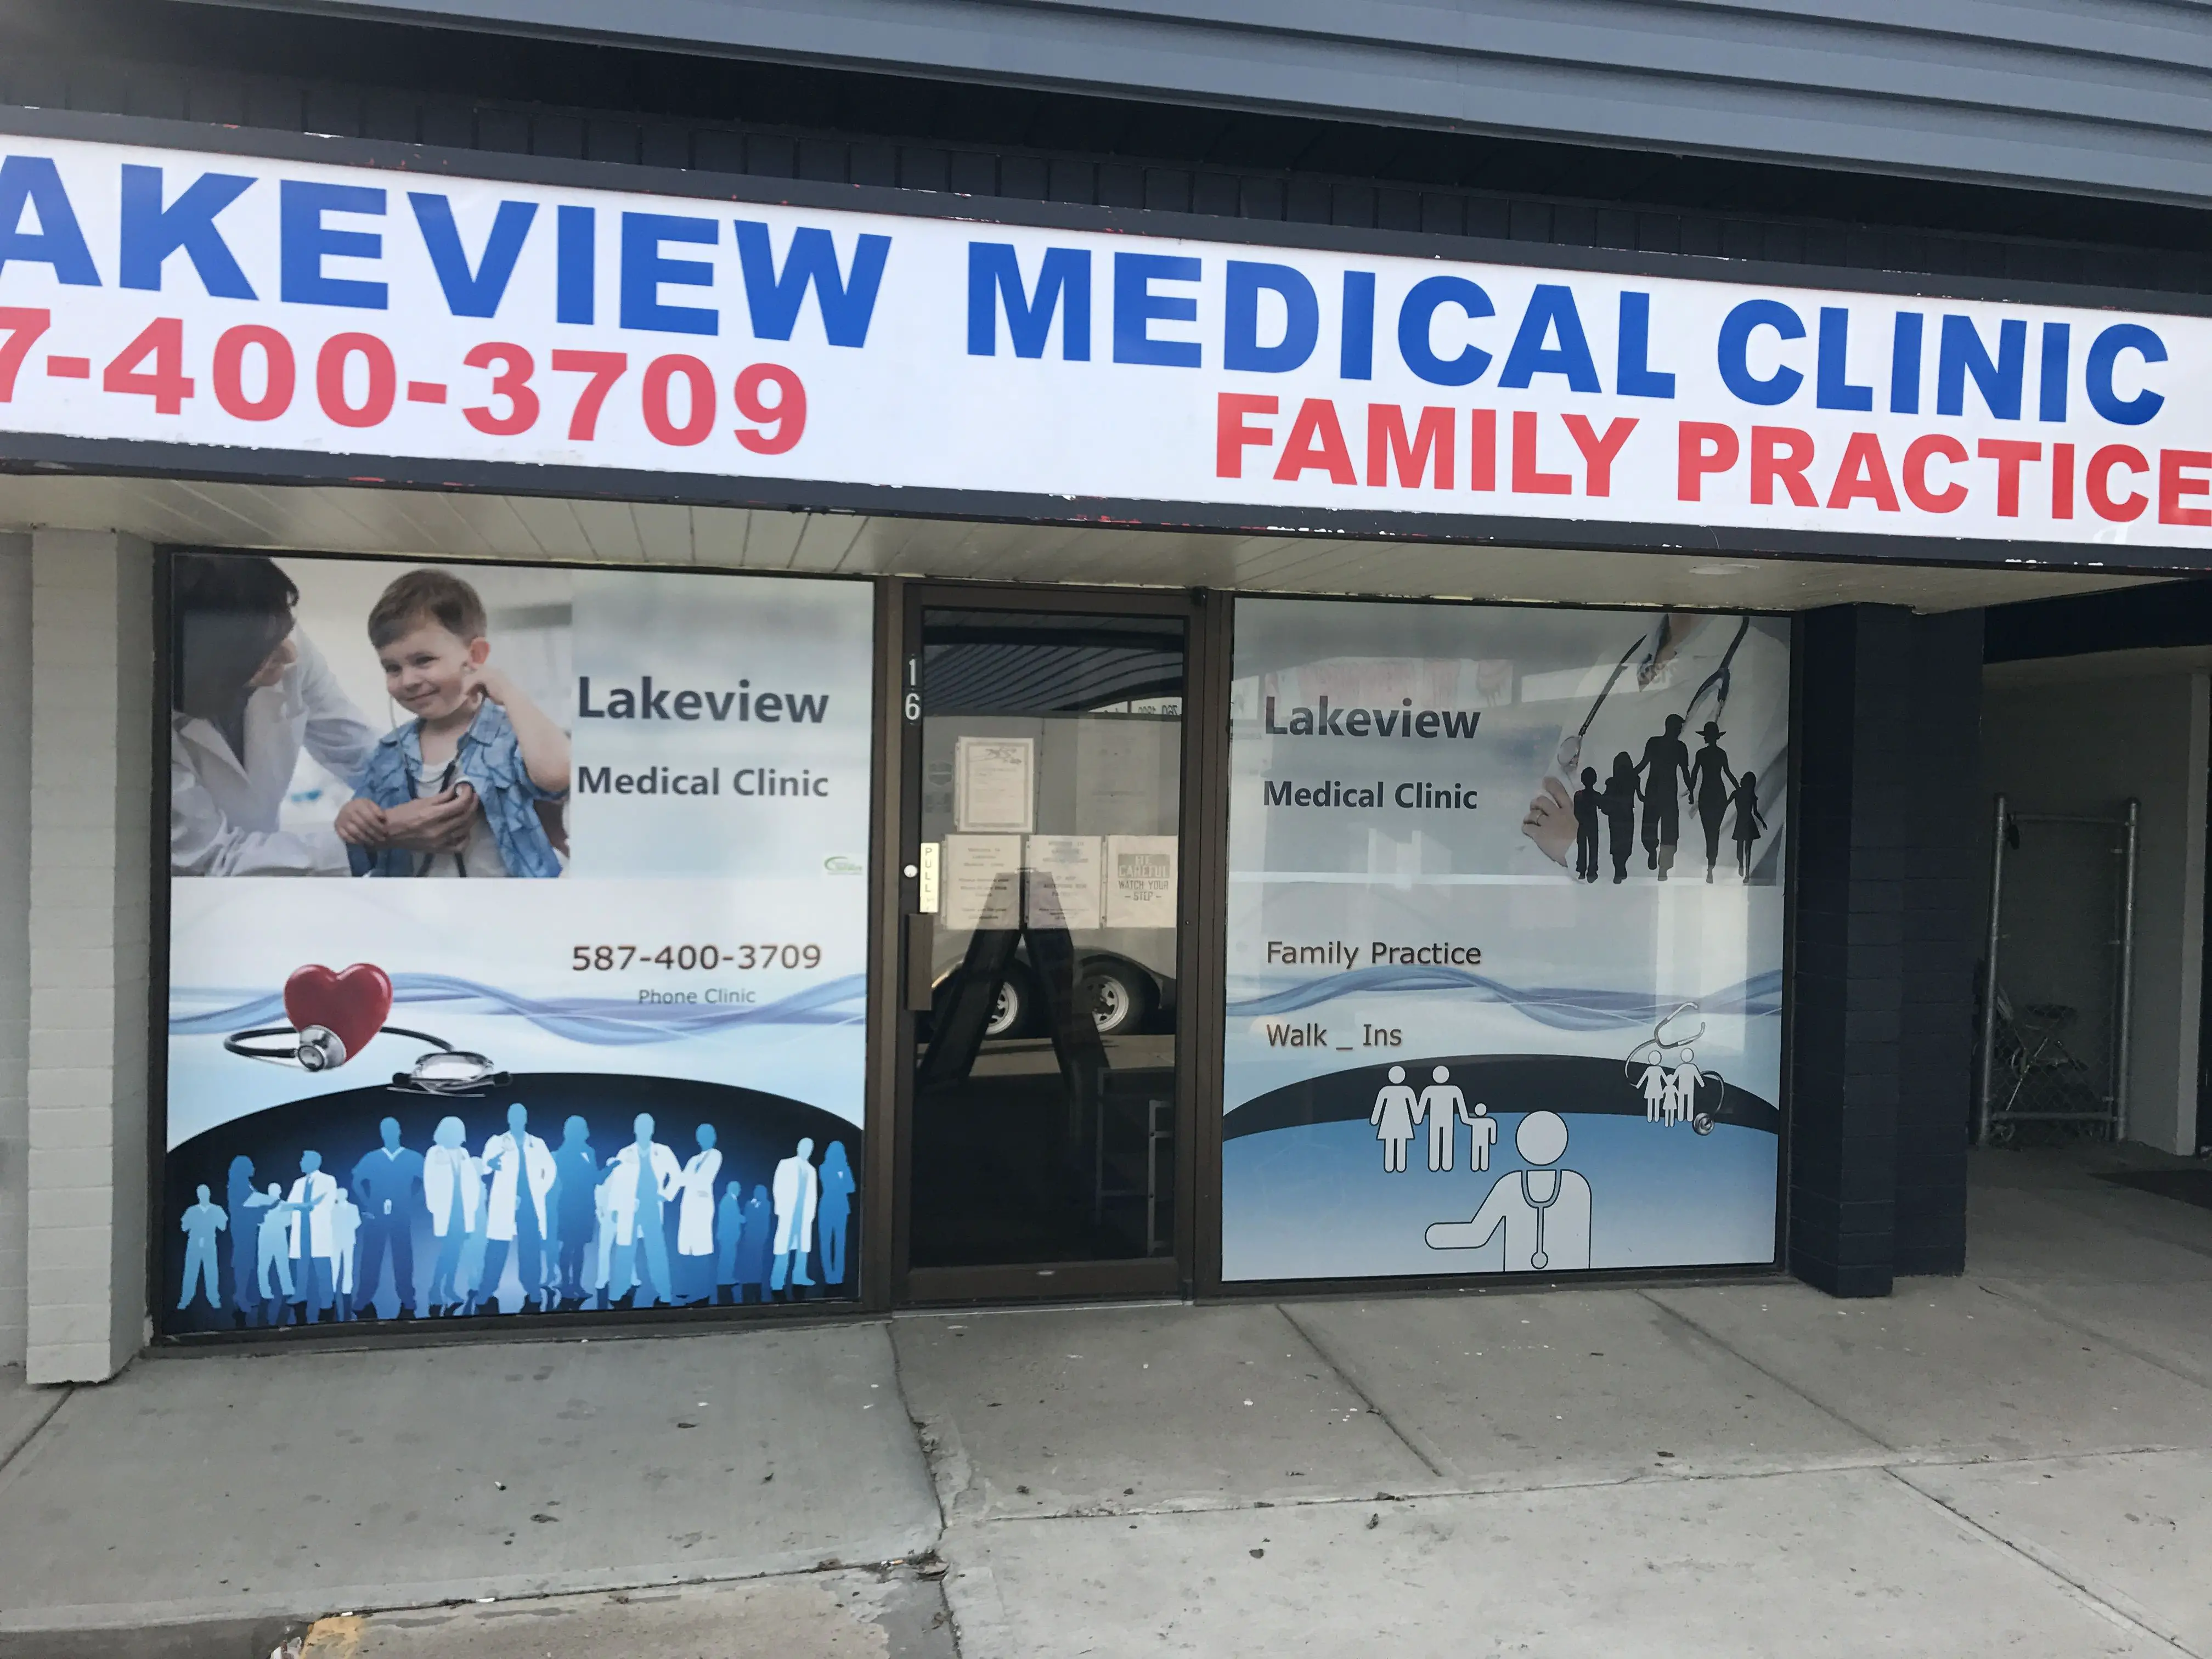 Primary Care Clinic, Edmonton